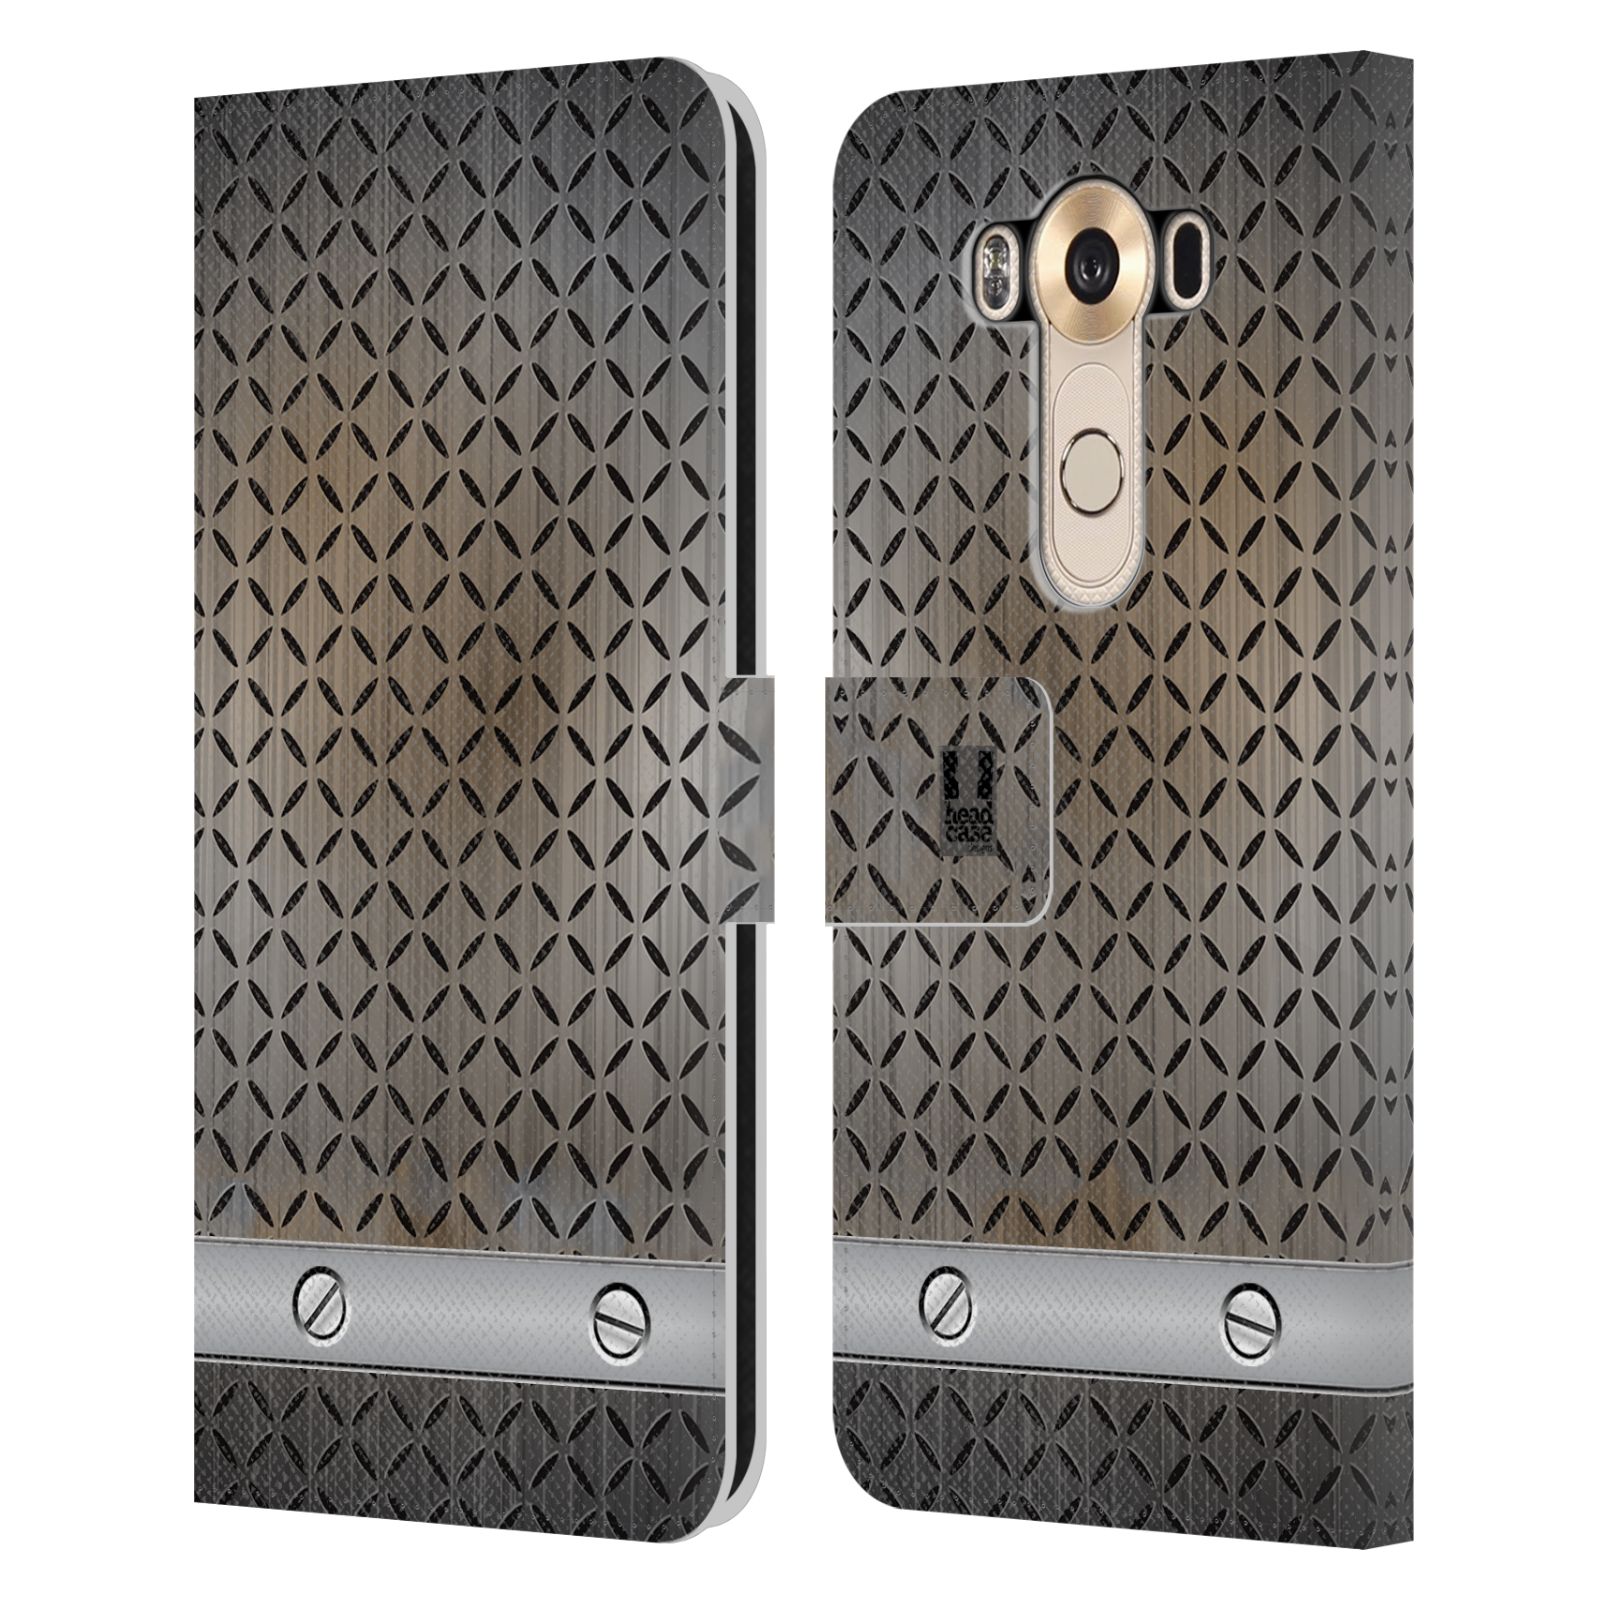 HEAD CASE Flipové pouzdro pro mobil LG V10 stavební textury železo šedá barva